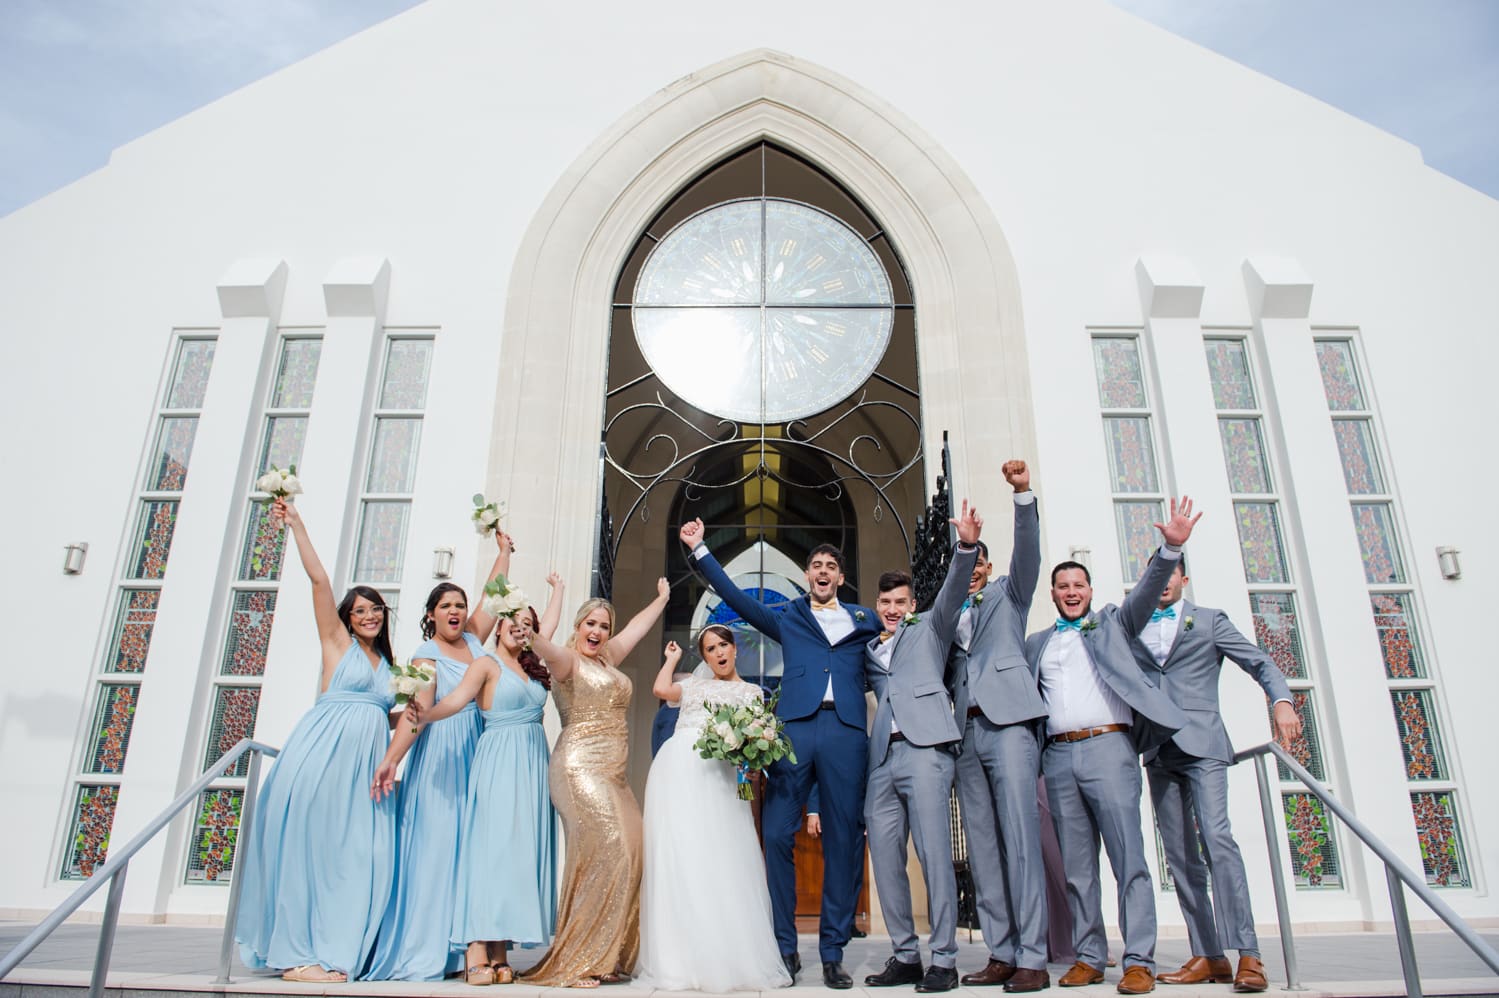 Boda en Parroquia Stella Maris en Condado por Camille Fontanez fotografo de bodas en Puerto Rico